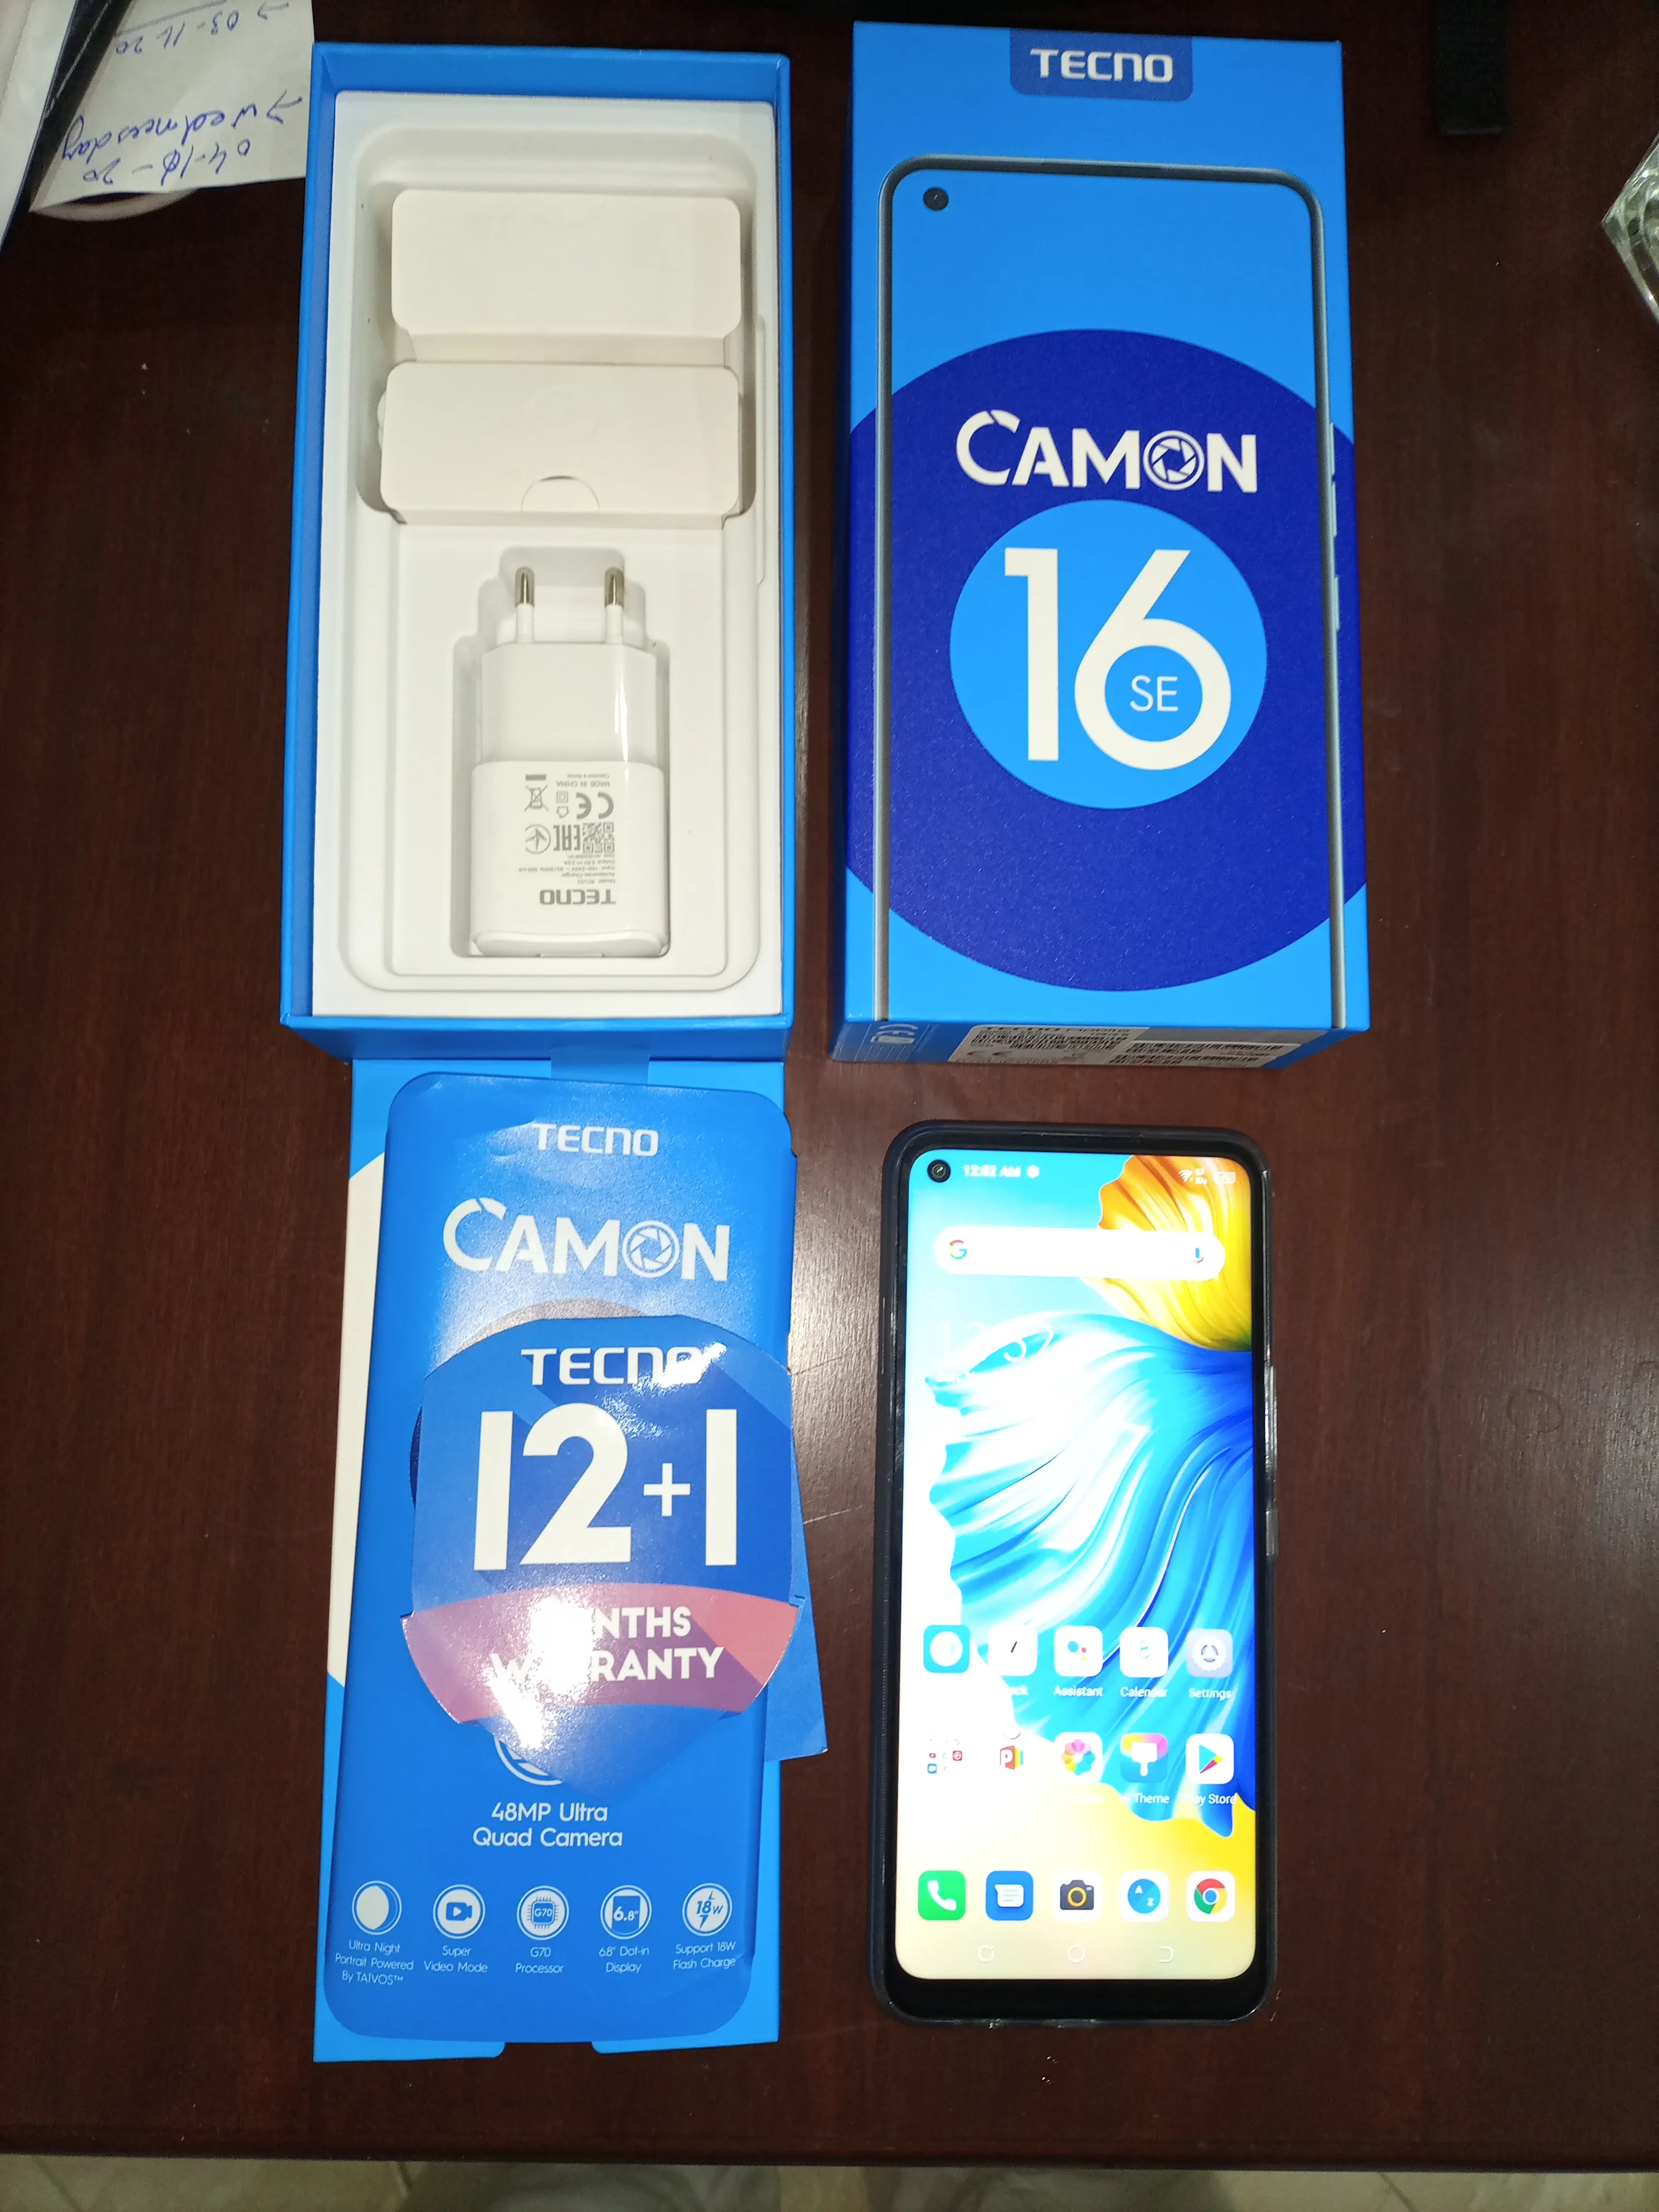 New Tecno Camon 16 SE (Cloud White) - photo 1